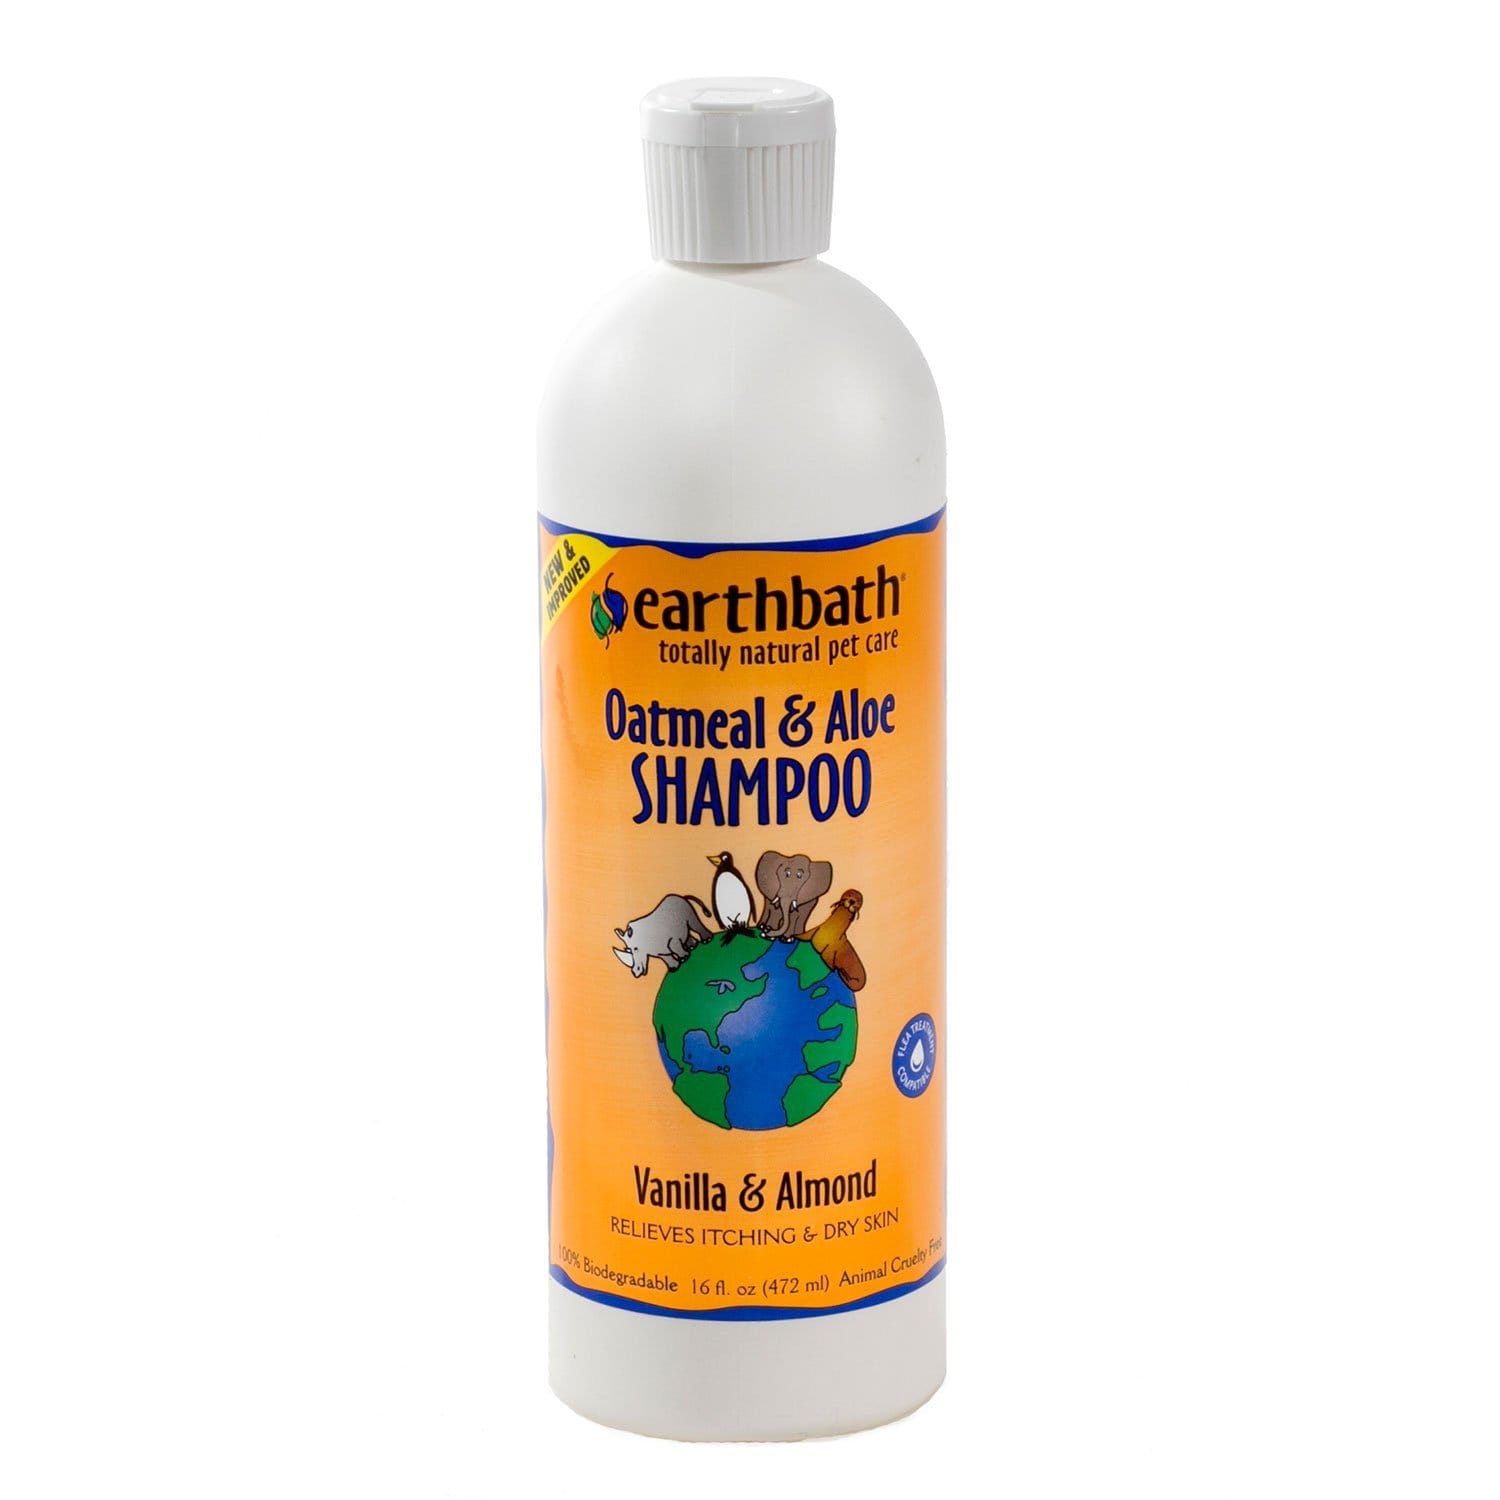 EARTHBATH Oatmeal & Aloe Shampoo Vanilla & Almond 475ml - My Pooch and Co.